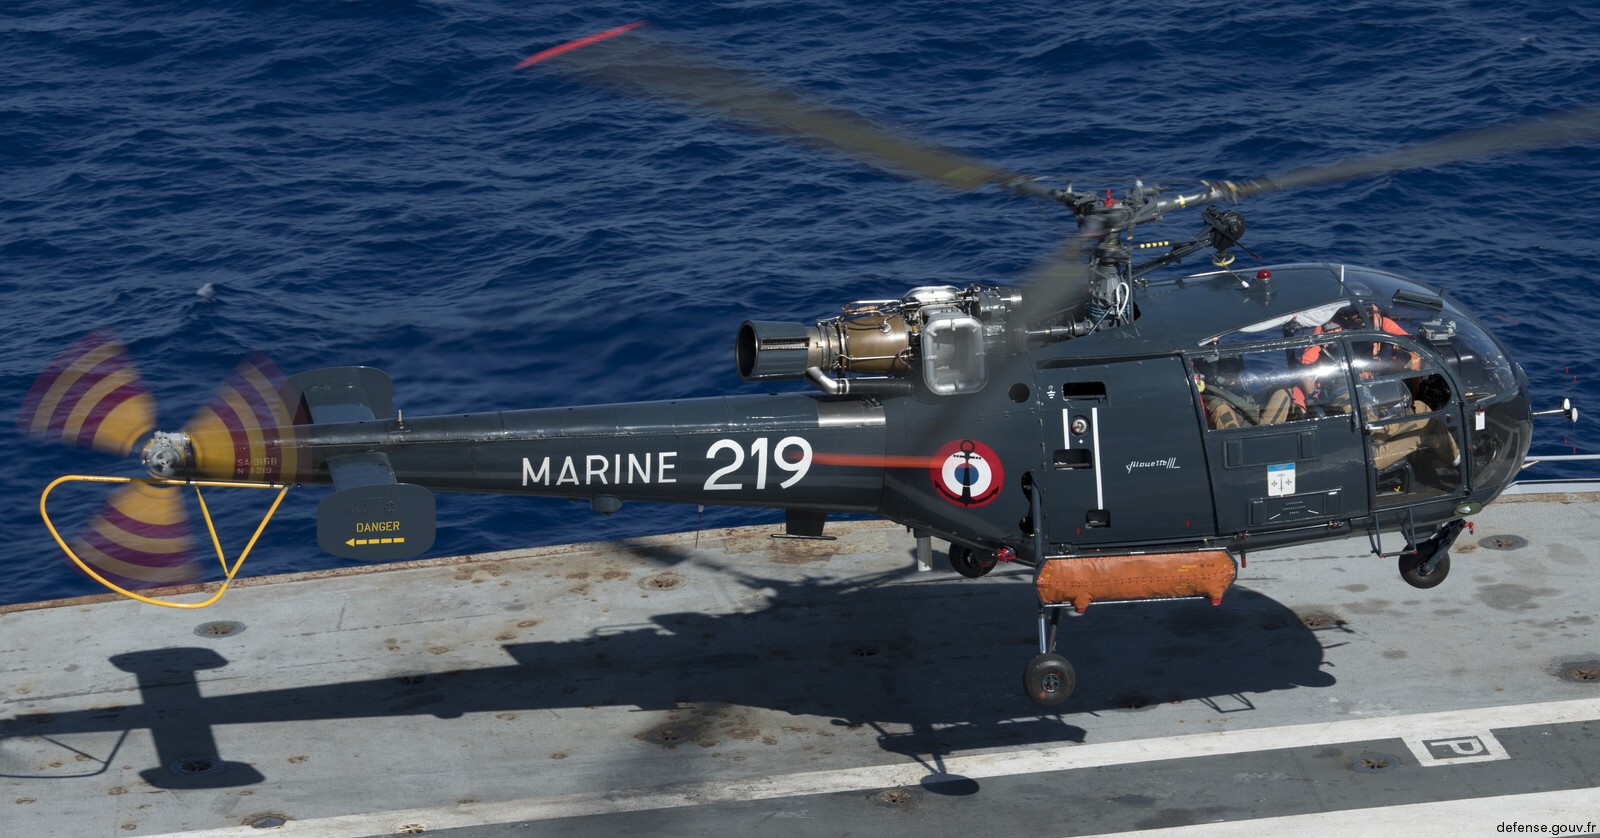 sa 316 319 alouette iii helicopter french navy marine nationale aeronavale flottille 219 30